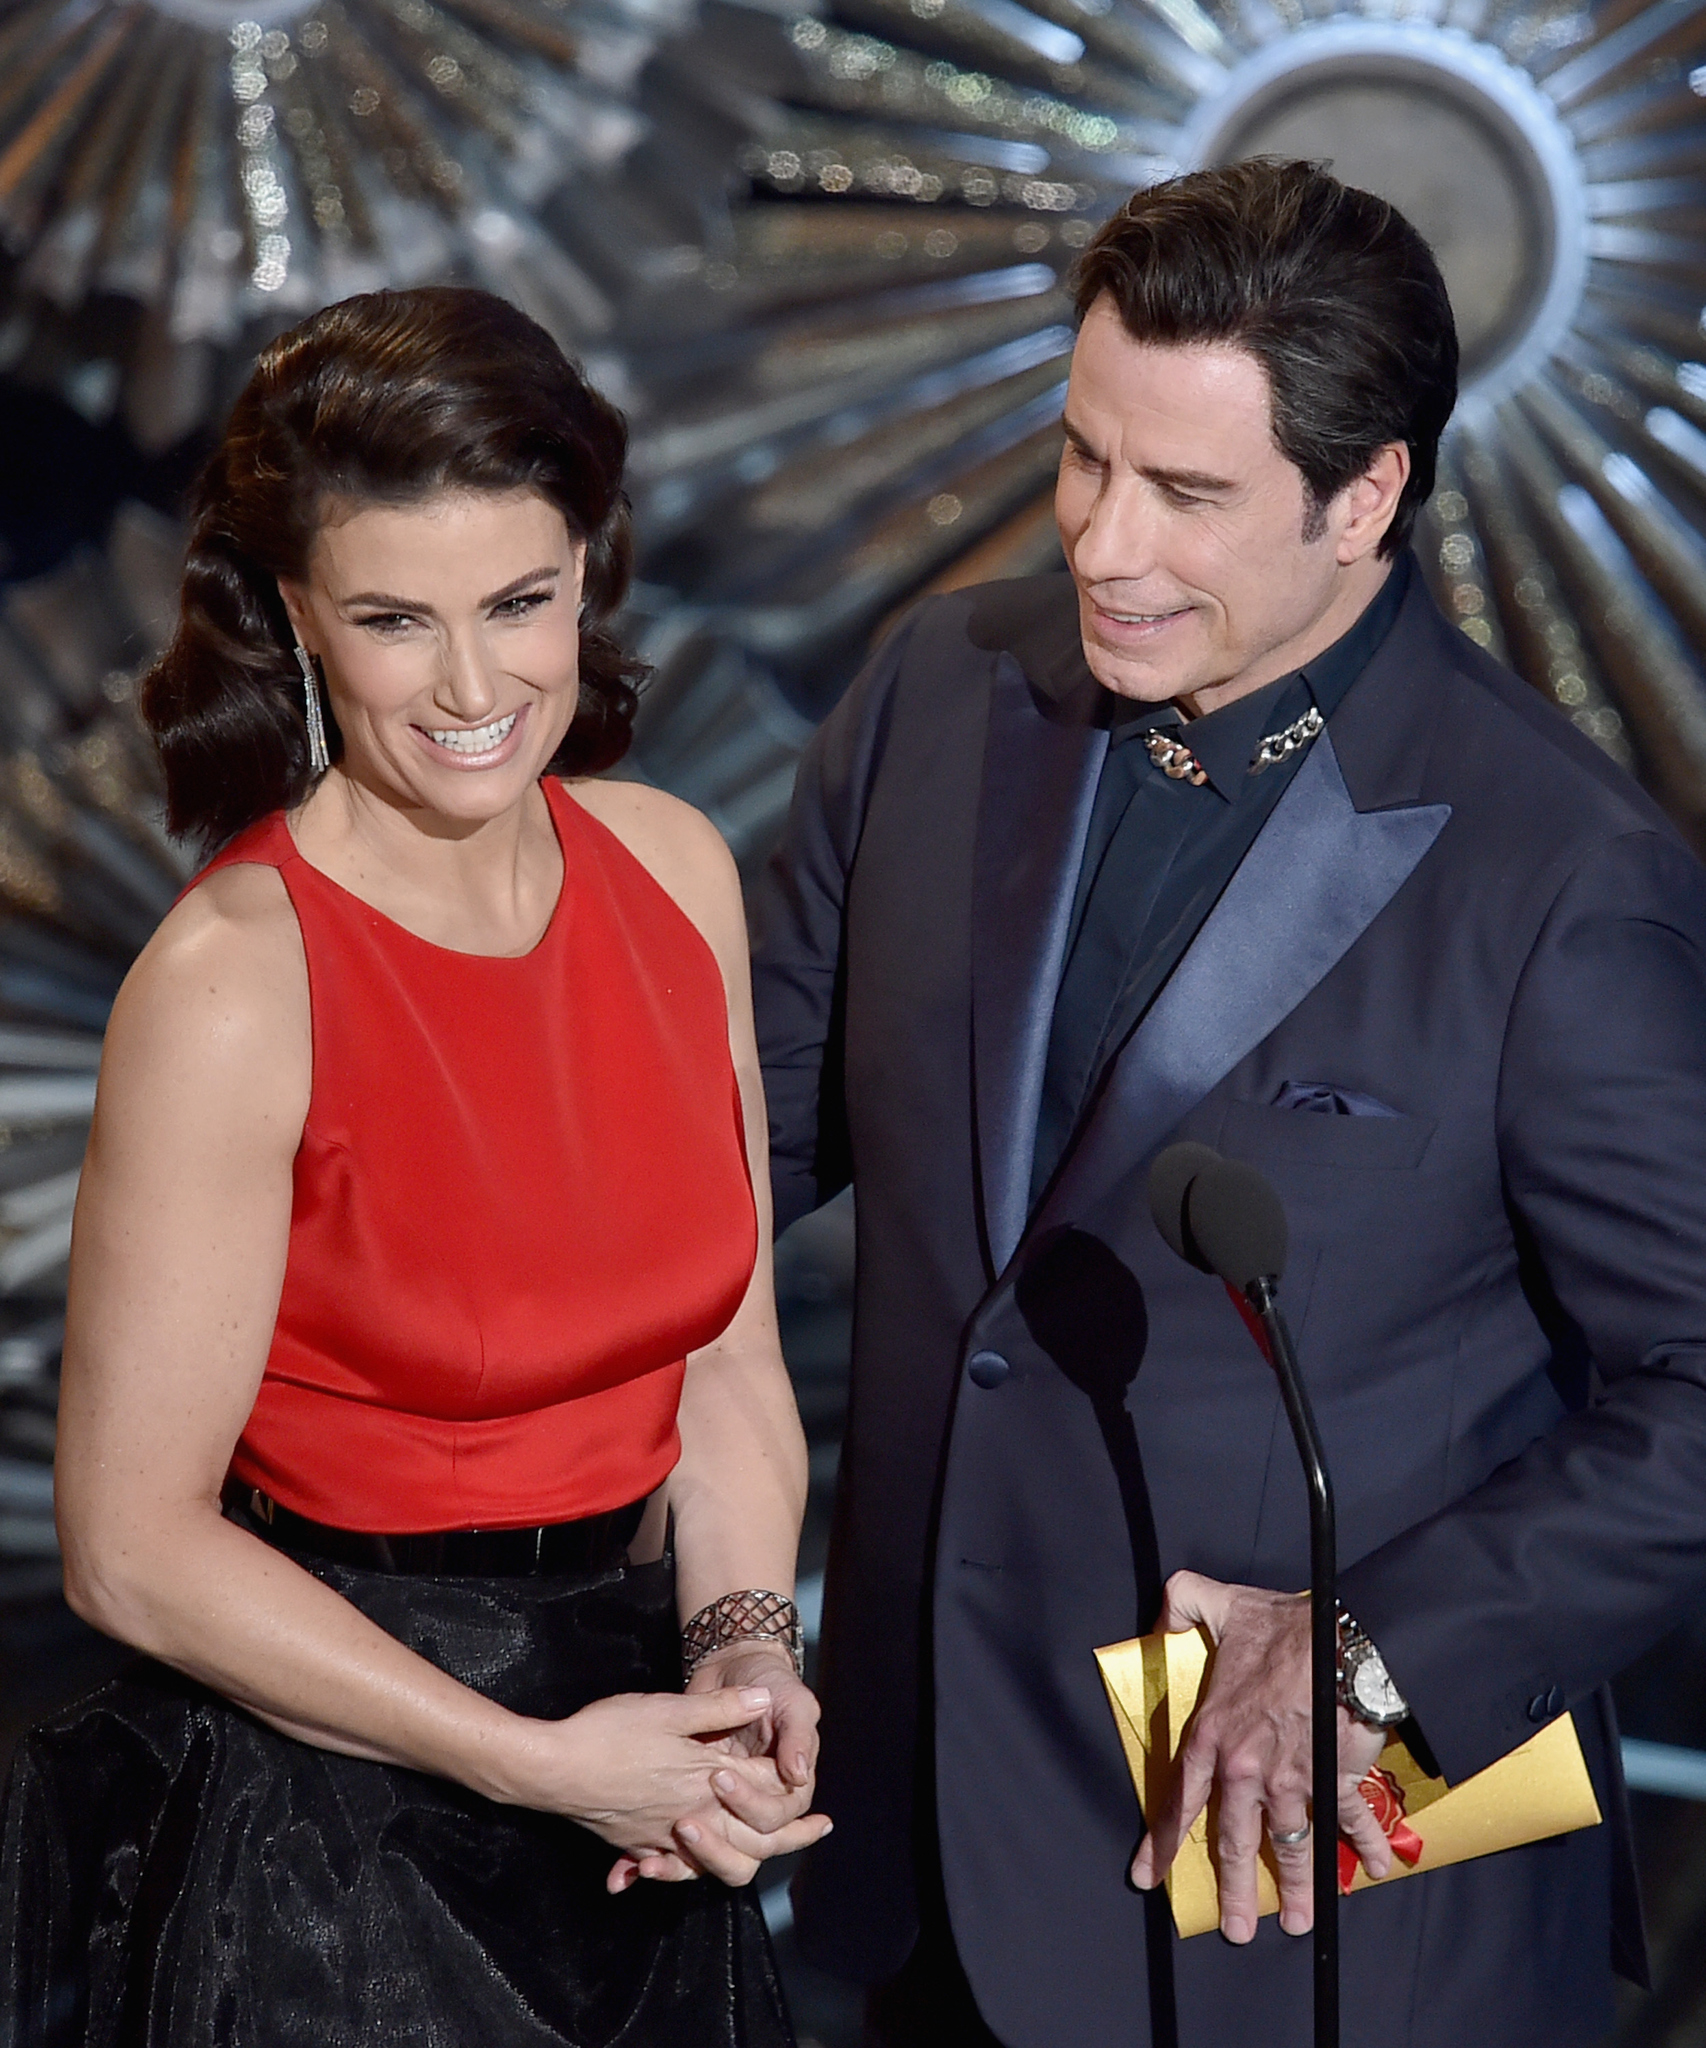 John Travolta and Idina Menzel at event of The Oscars (2015)